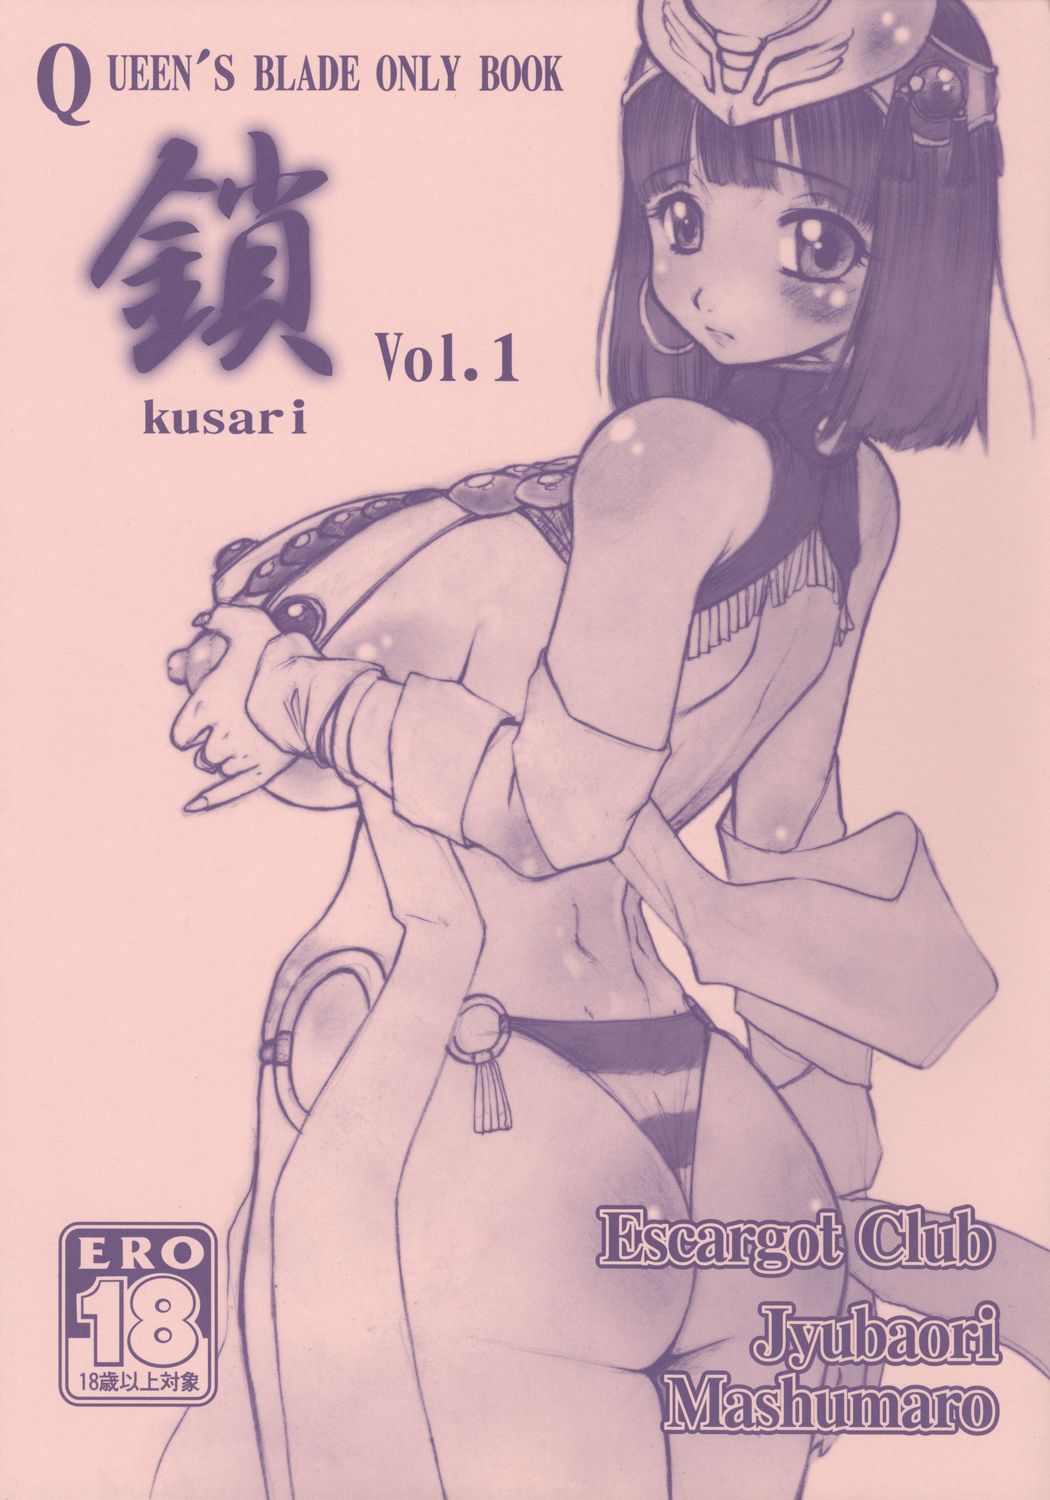 [Escargot Club (Juubaori Mashumaro)] KUSARI Vol.1 (Queen's Blade) page 1 full